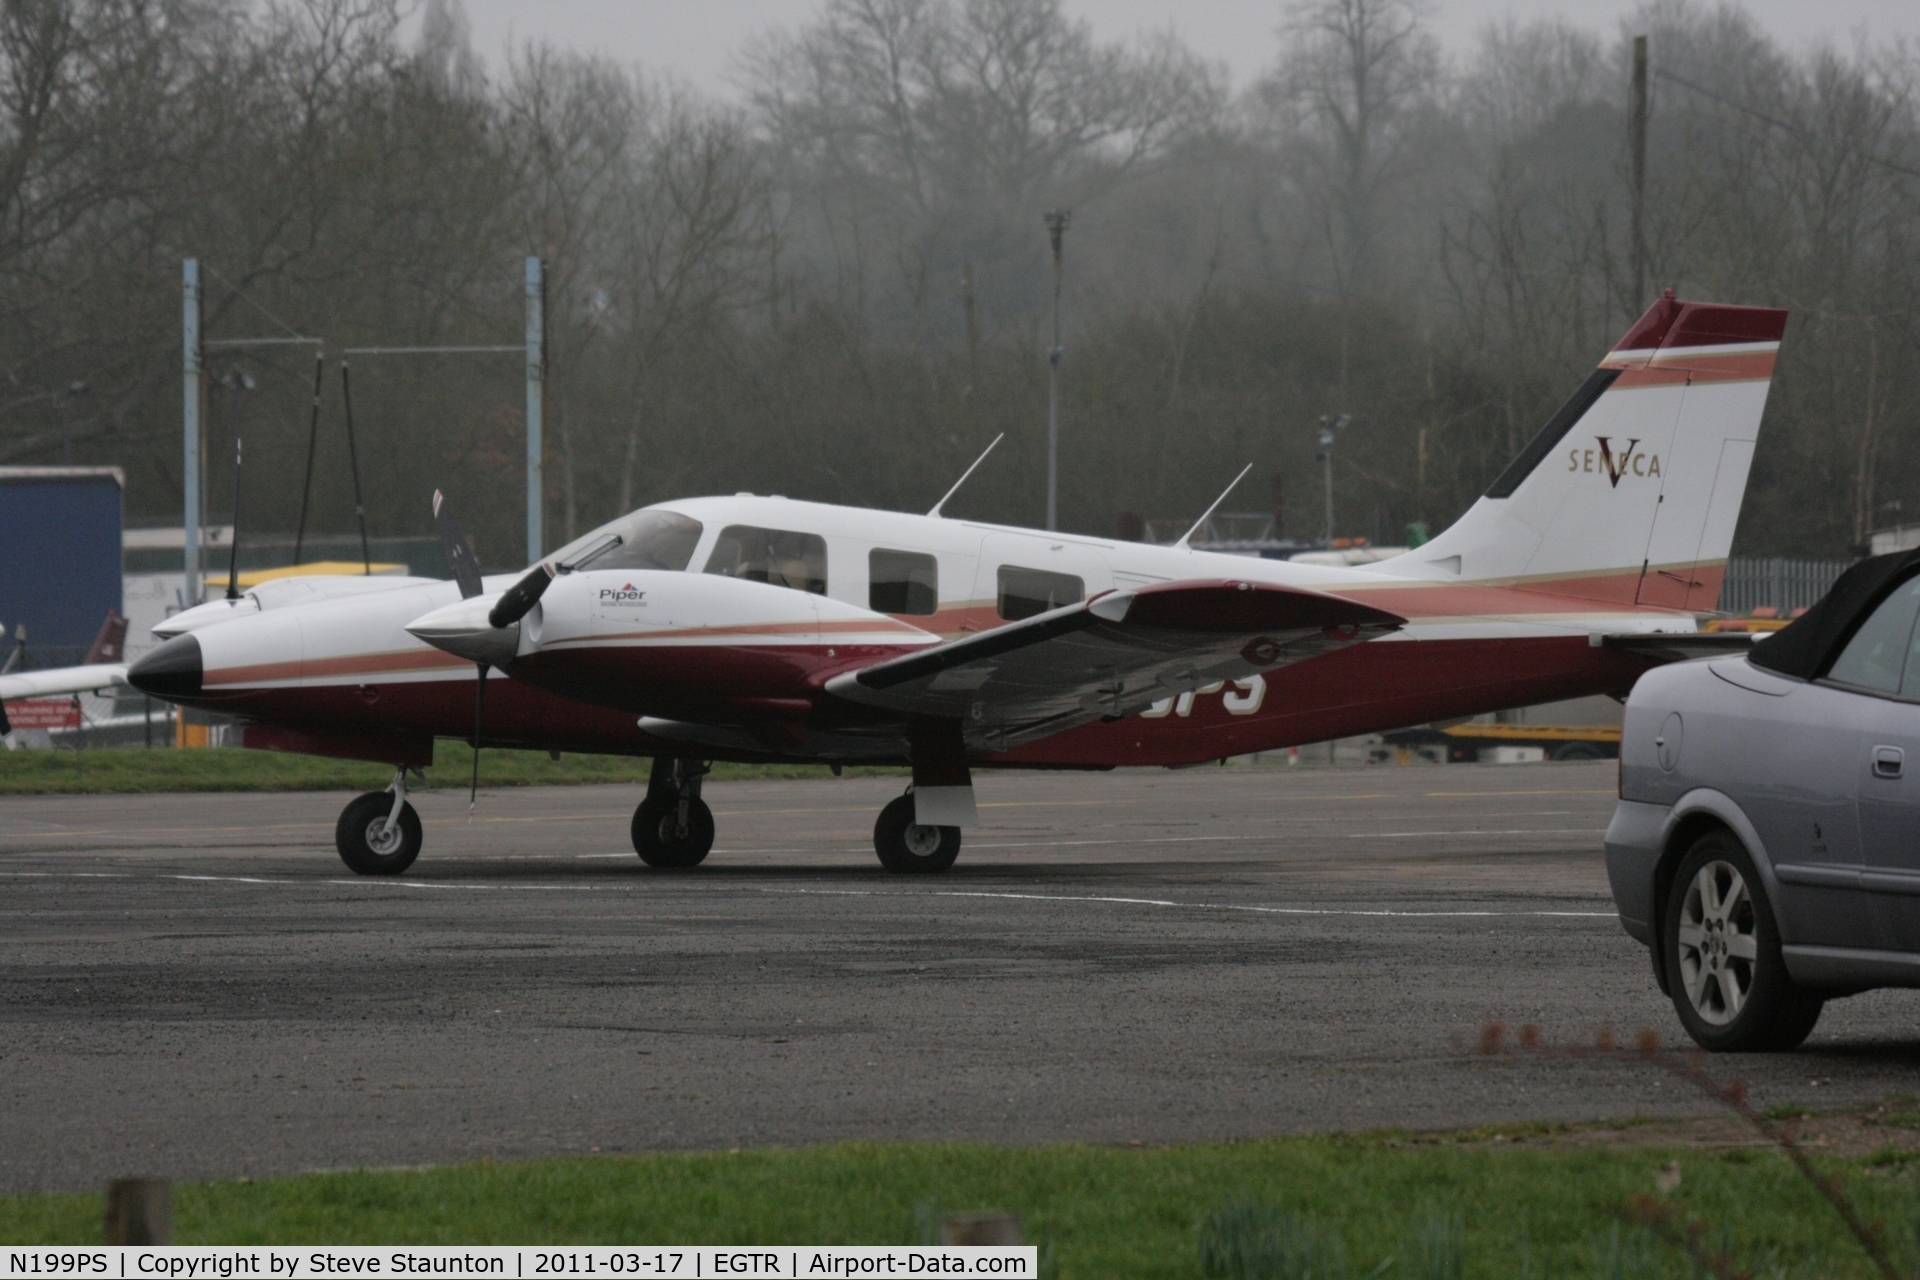 N199PS, 1999 Piper PA-34-220T Seneca V C/N 3449108, Taken at Elstree Airfield March 2011